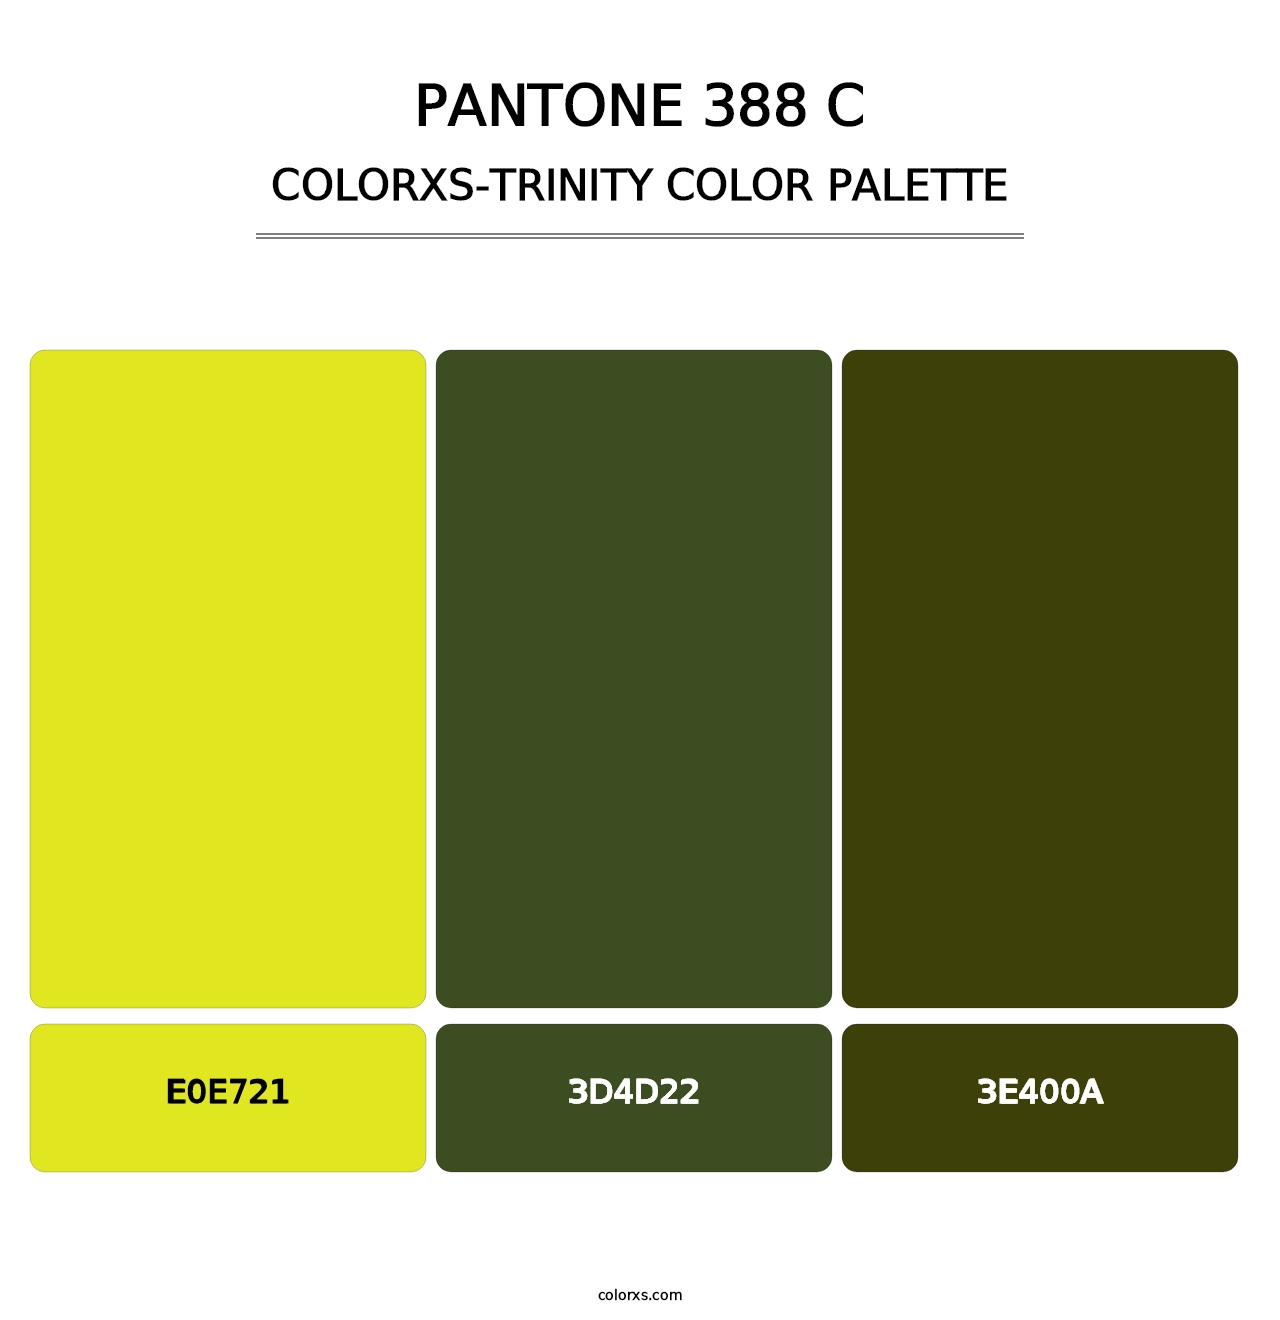 PANTONE 388 C - Colorxs Trinity Palette